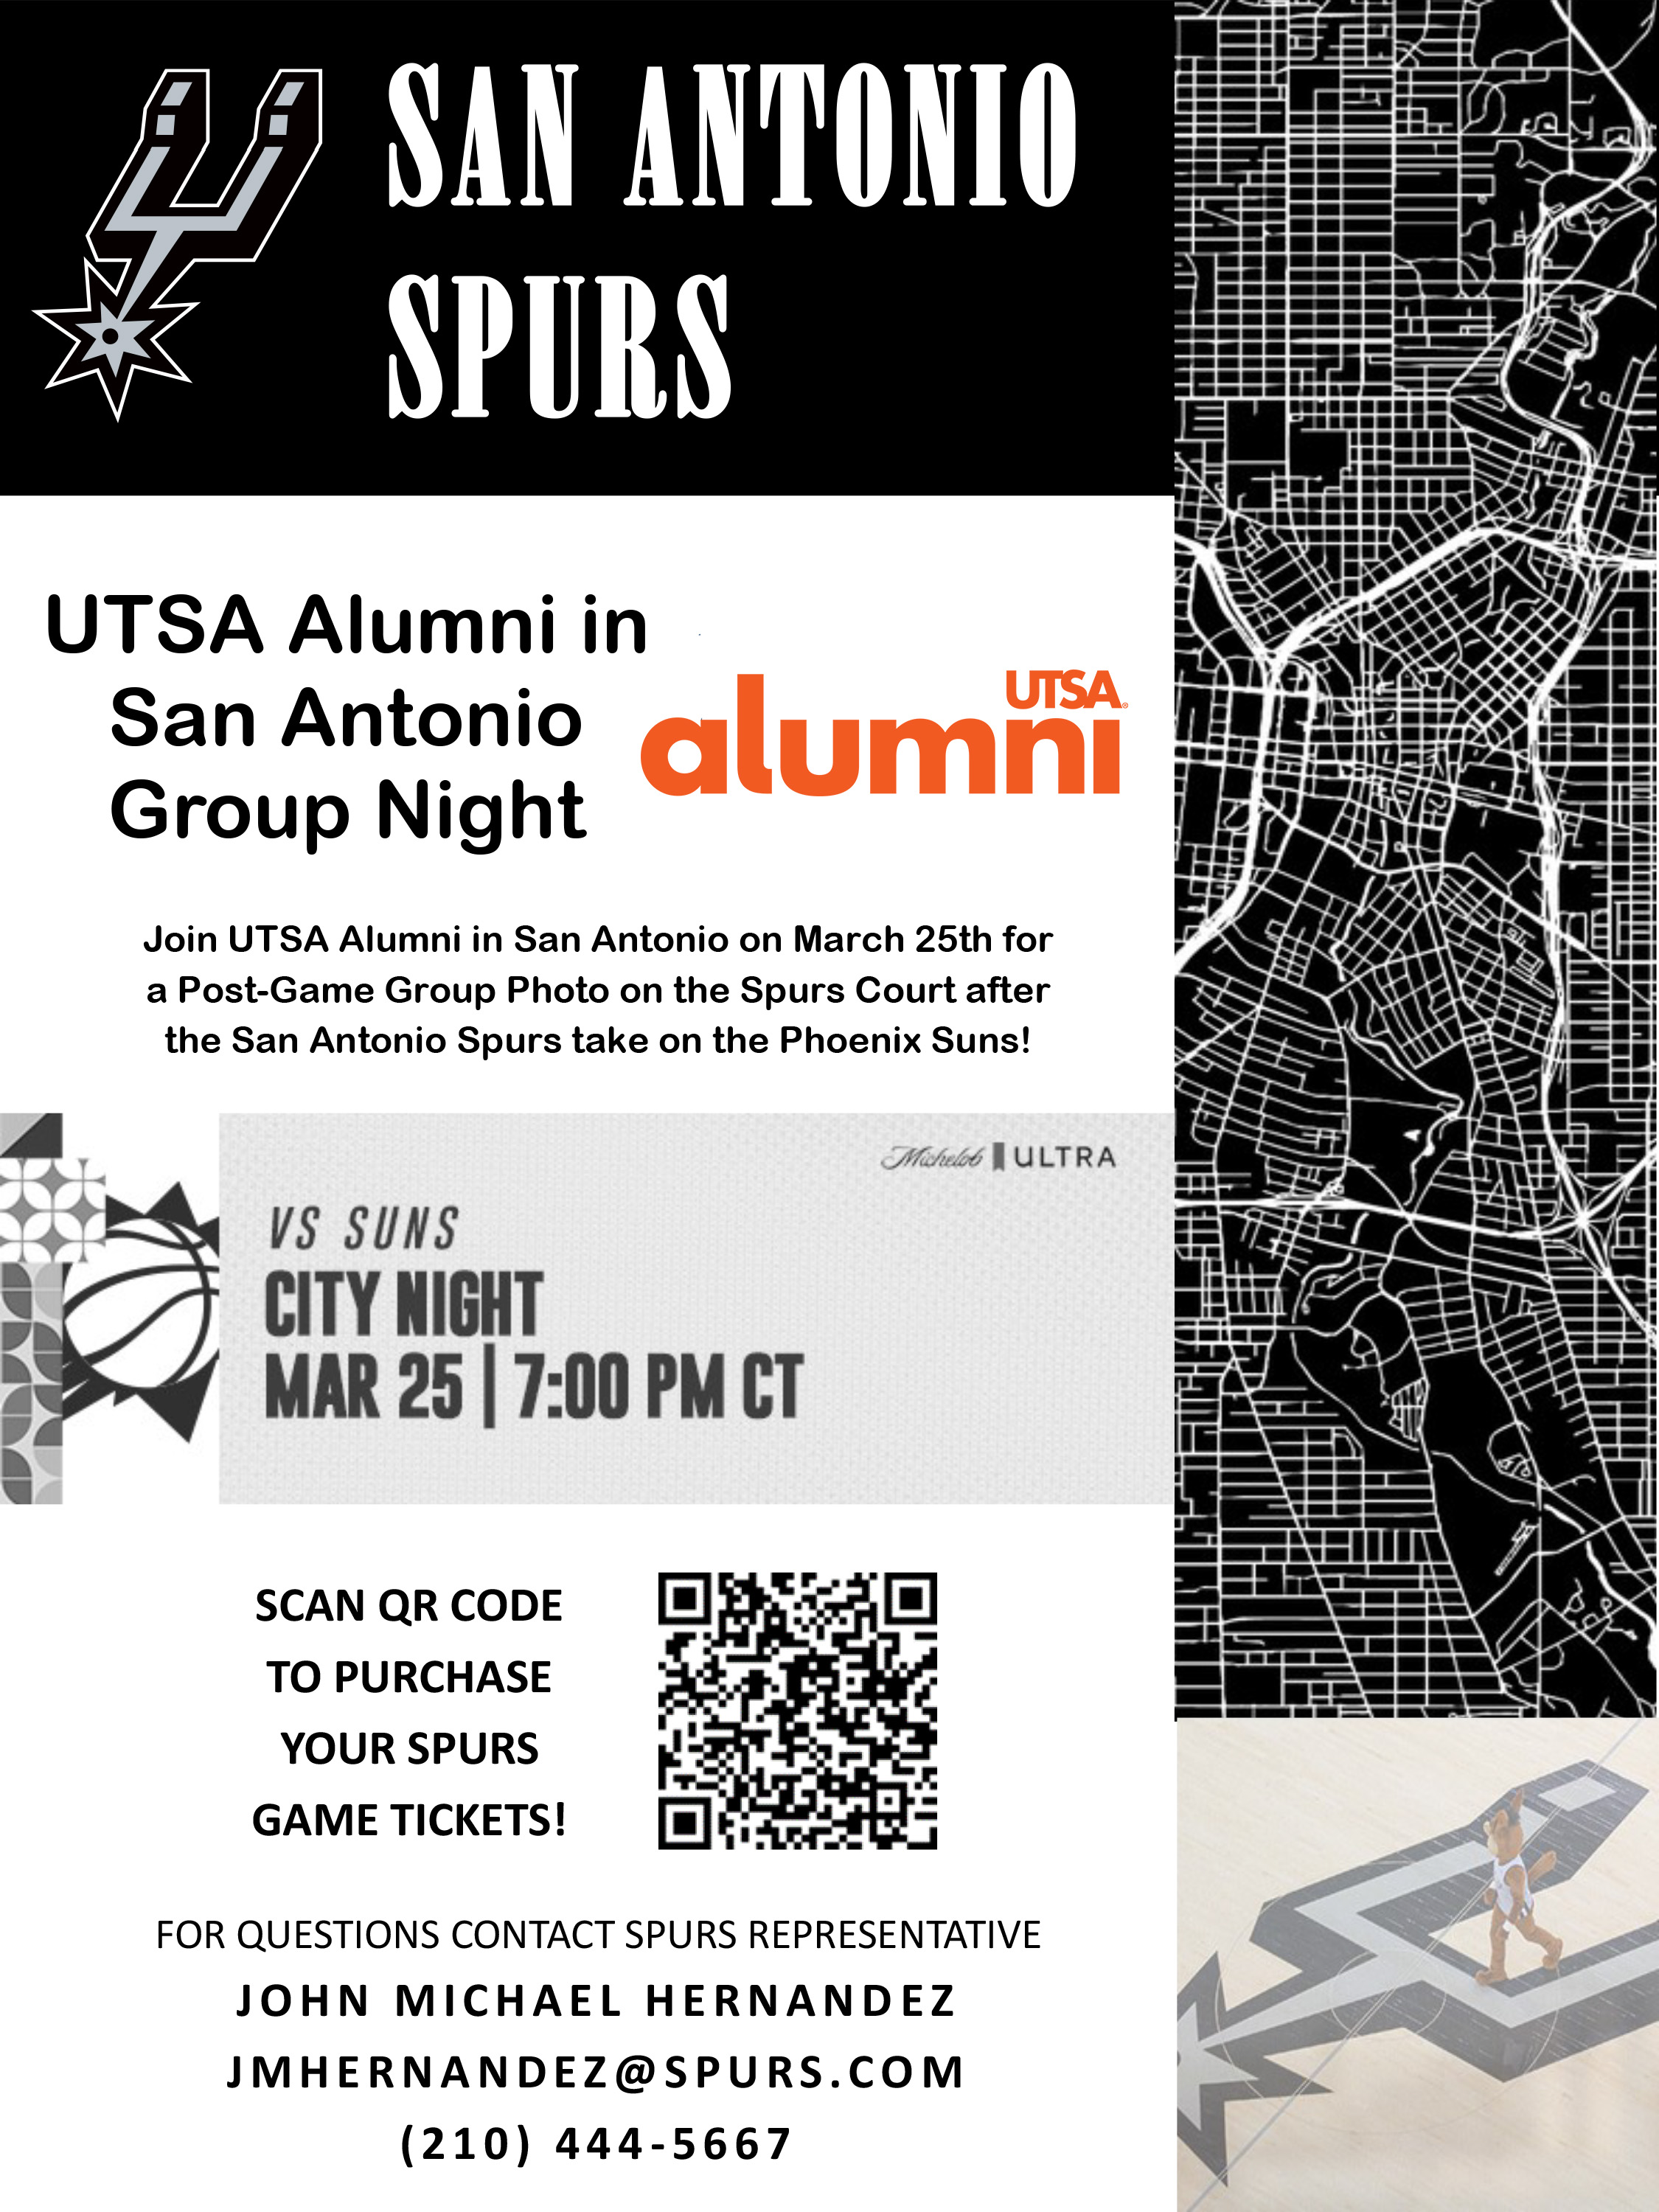 UTSA Alumni Night at the Spurs